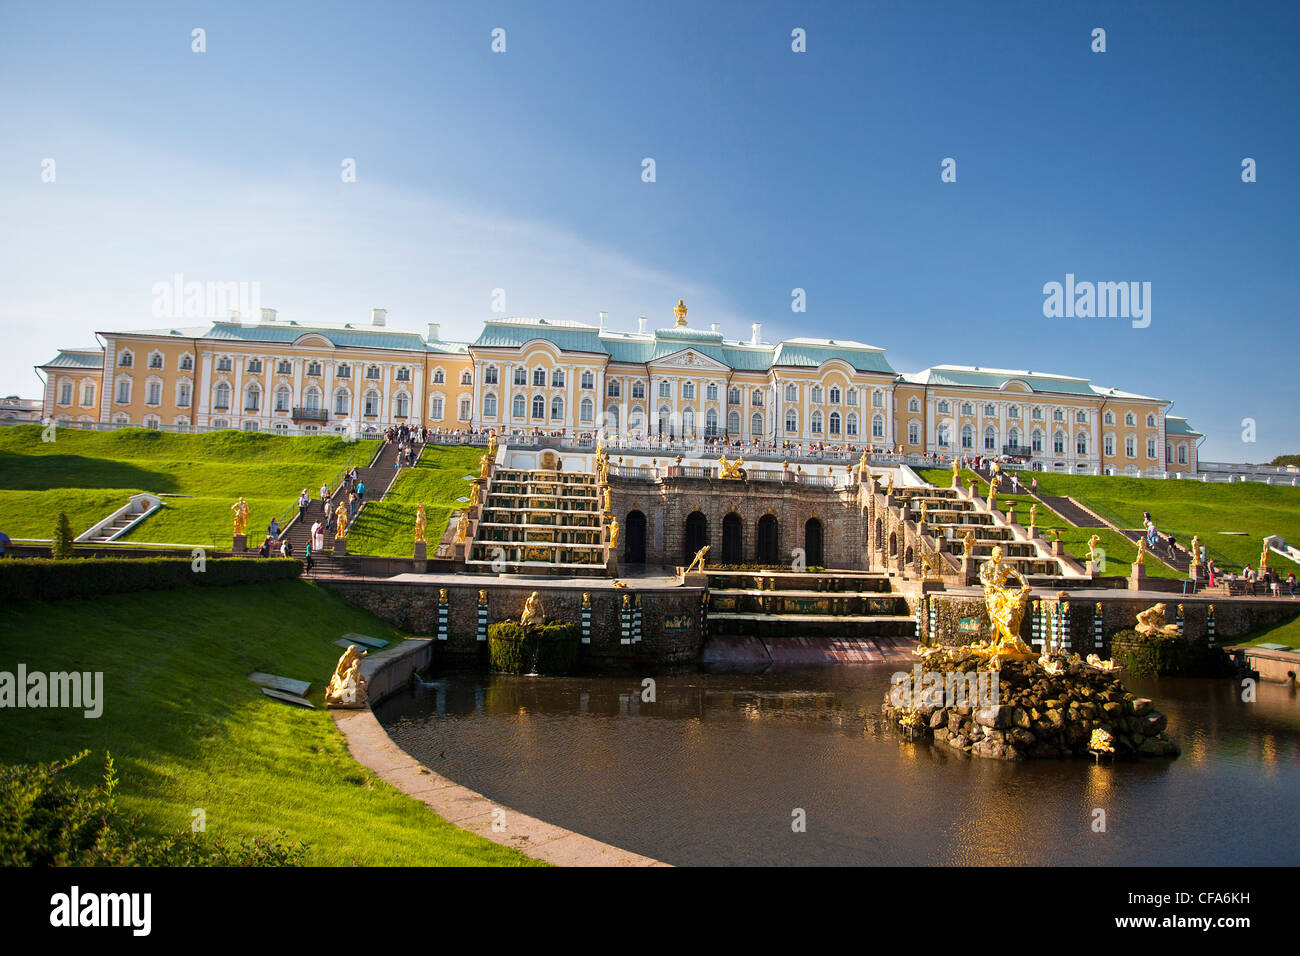 Russia, Europa, San Pietroburgo, Peterburg, città di Peterhof Palace, il Summer Palace, patrimonio mondiale, parco Foto Stock